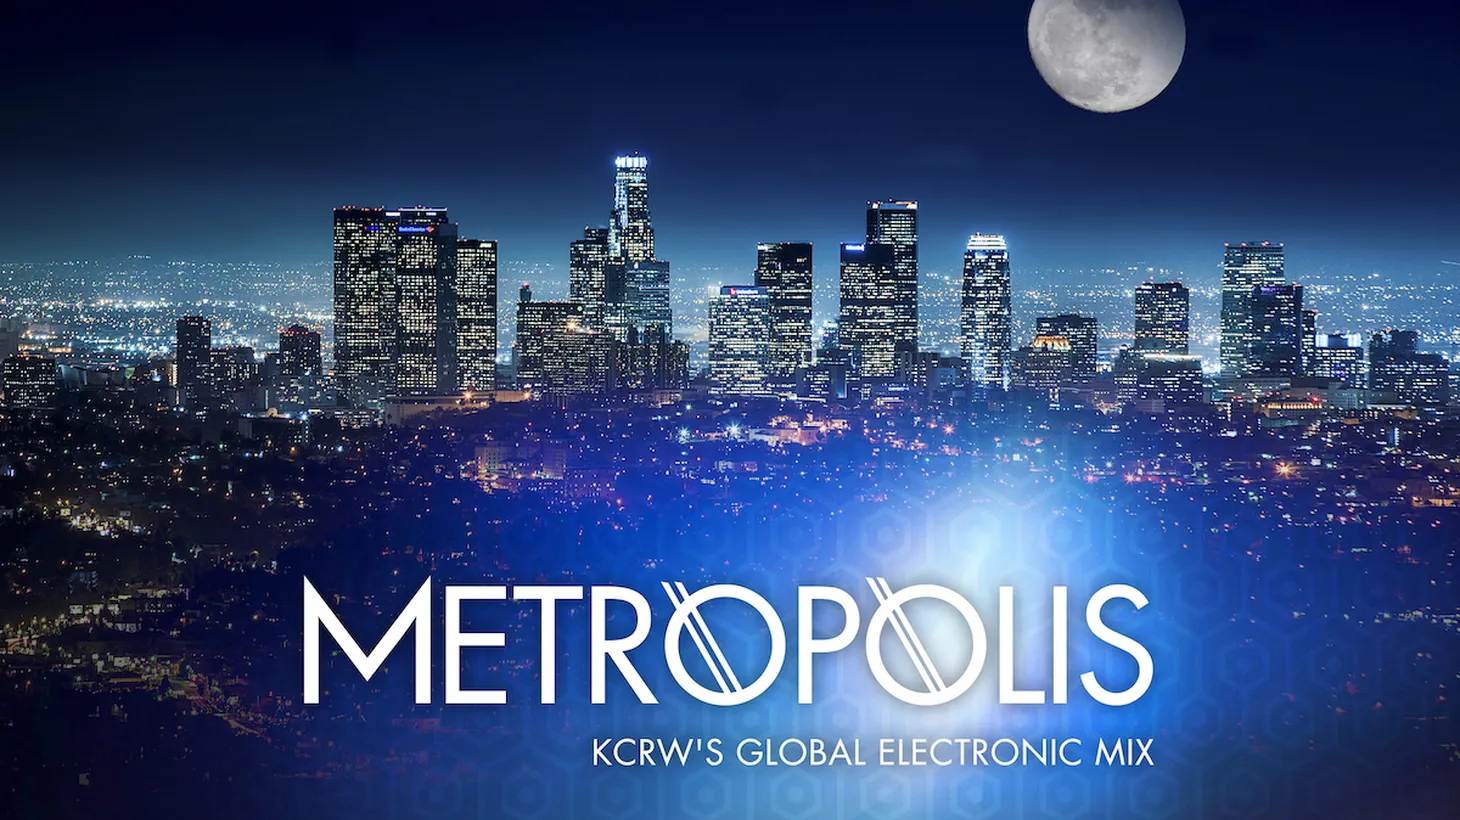 Metropolis playlist, January 8, 2022.